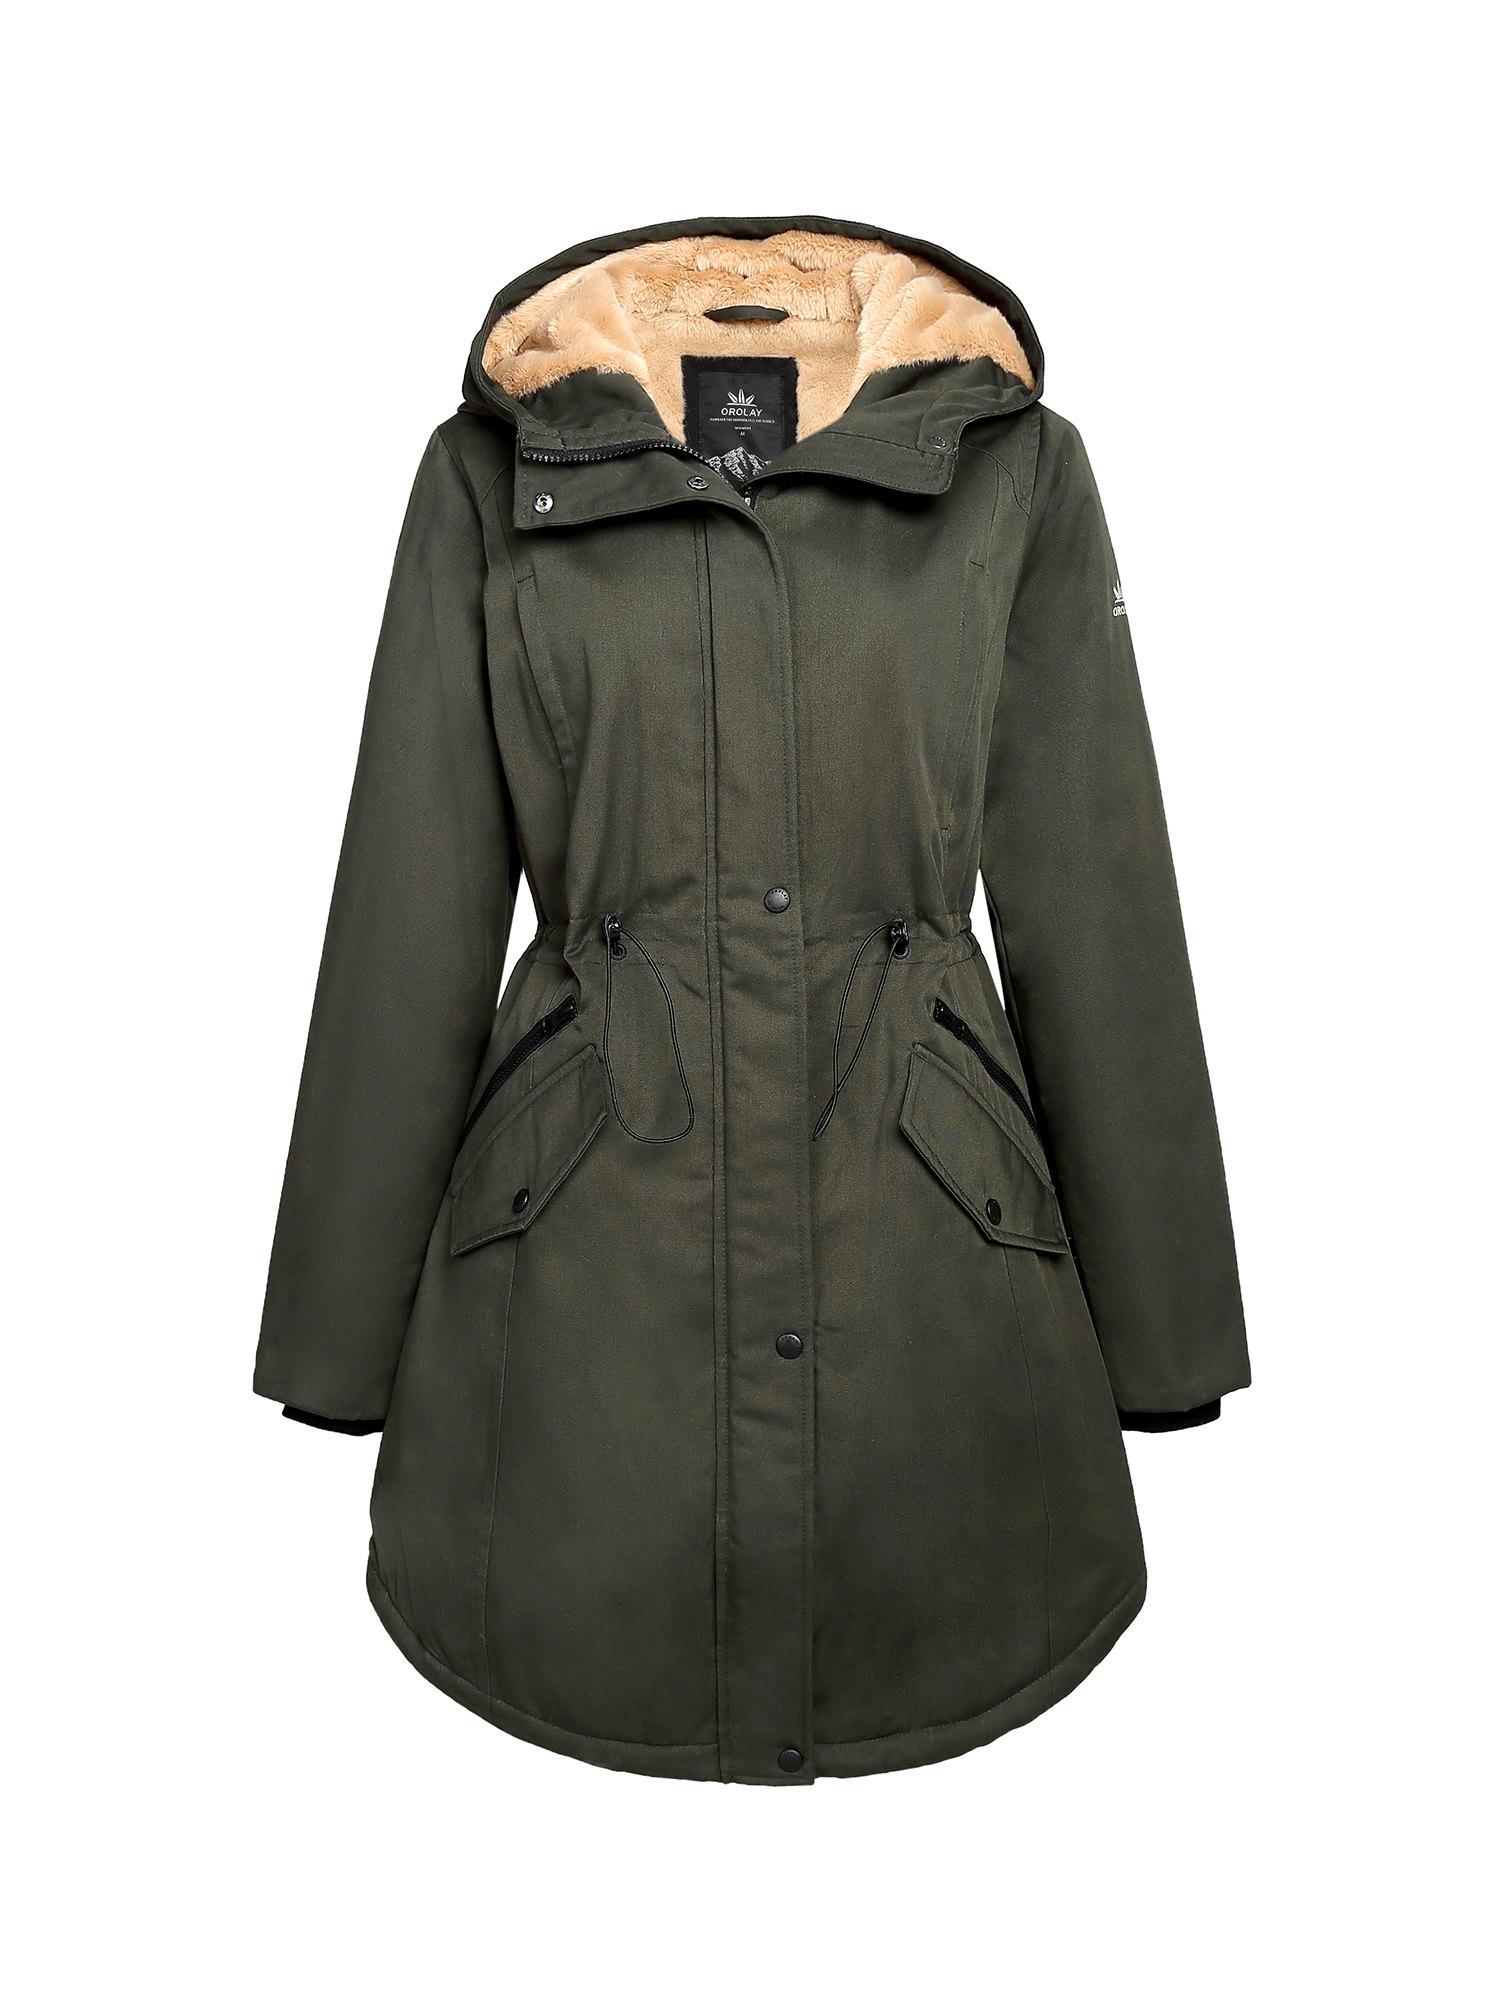 Orolay Women's Winter Parka Fleece Parka Warm Winter Coat Hoodie Jacket Mid length Winter Jacket Green XL - image 1 of 5